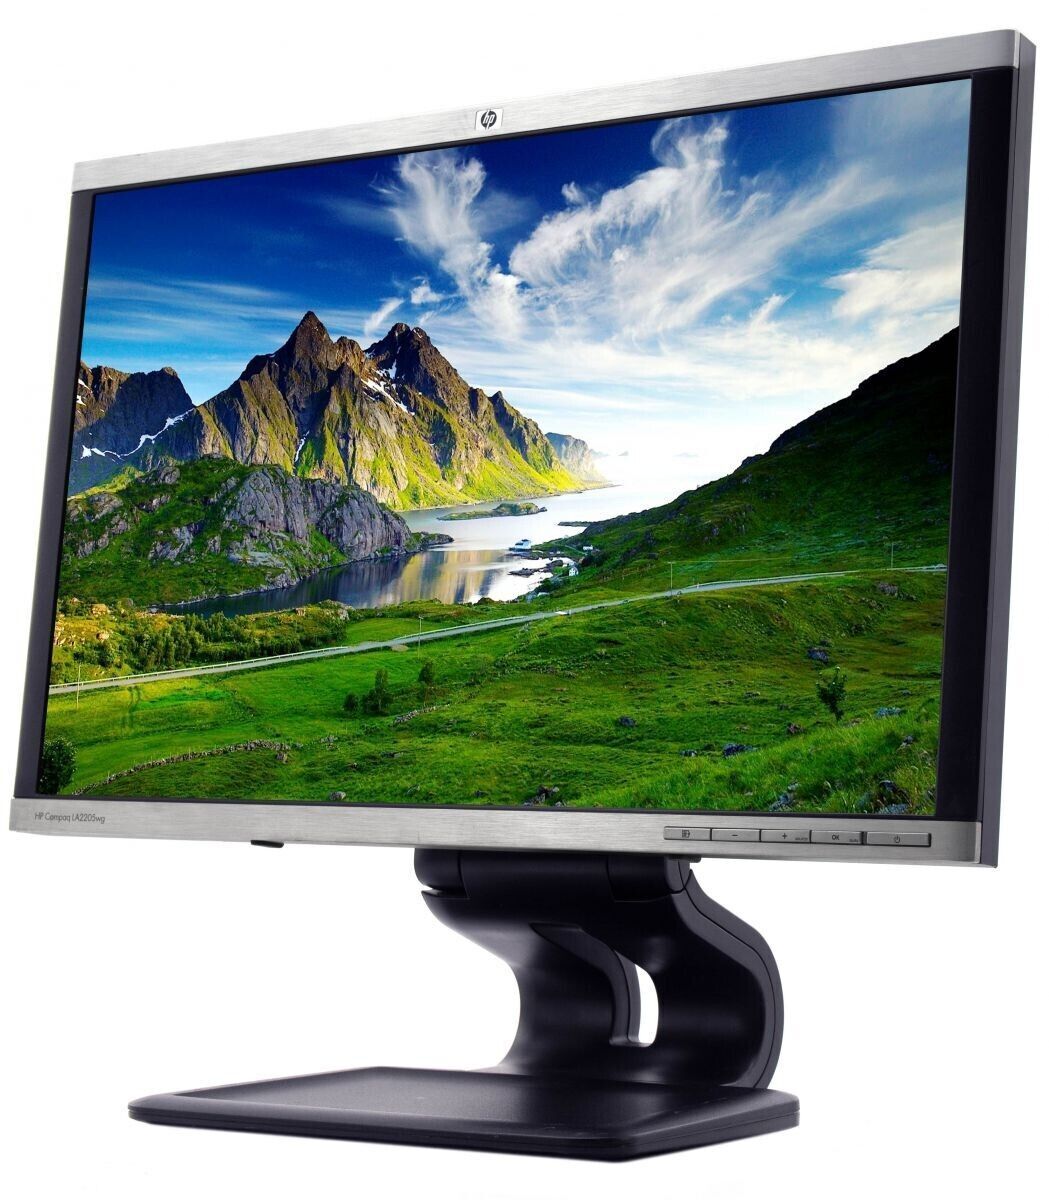 HP Compaq LA2205wg Black 22 Inch Flat Panel Widescreen LCD Monitor